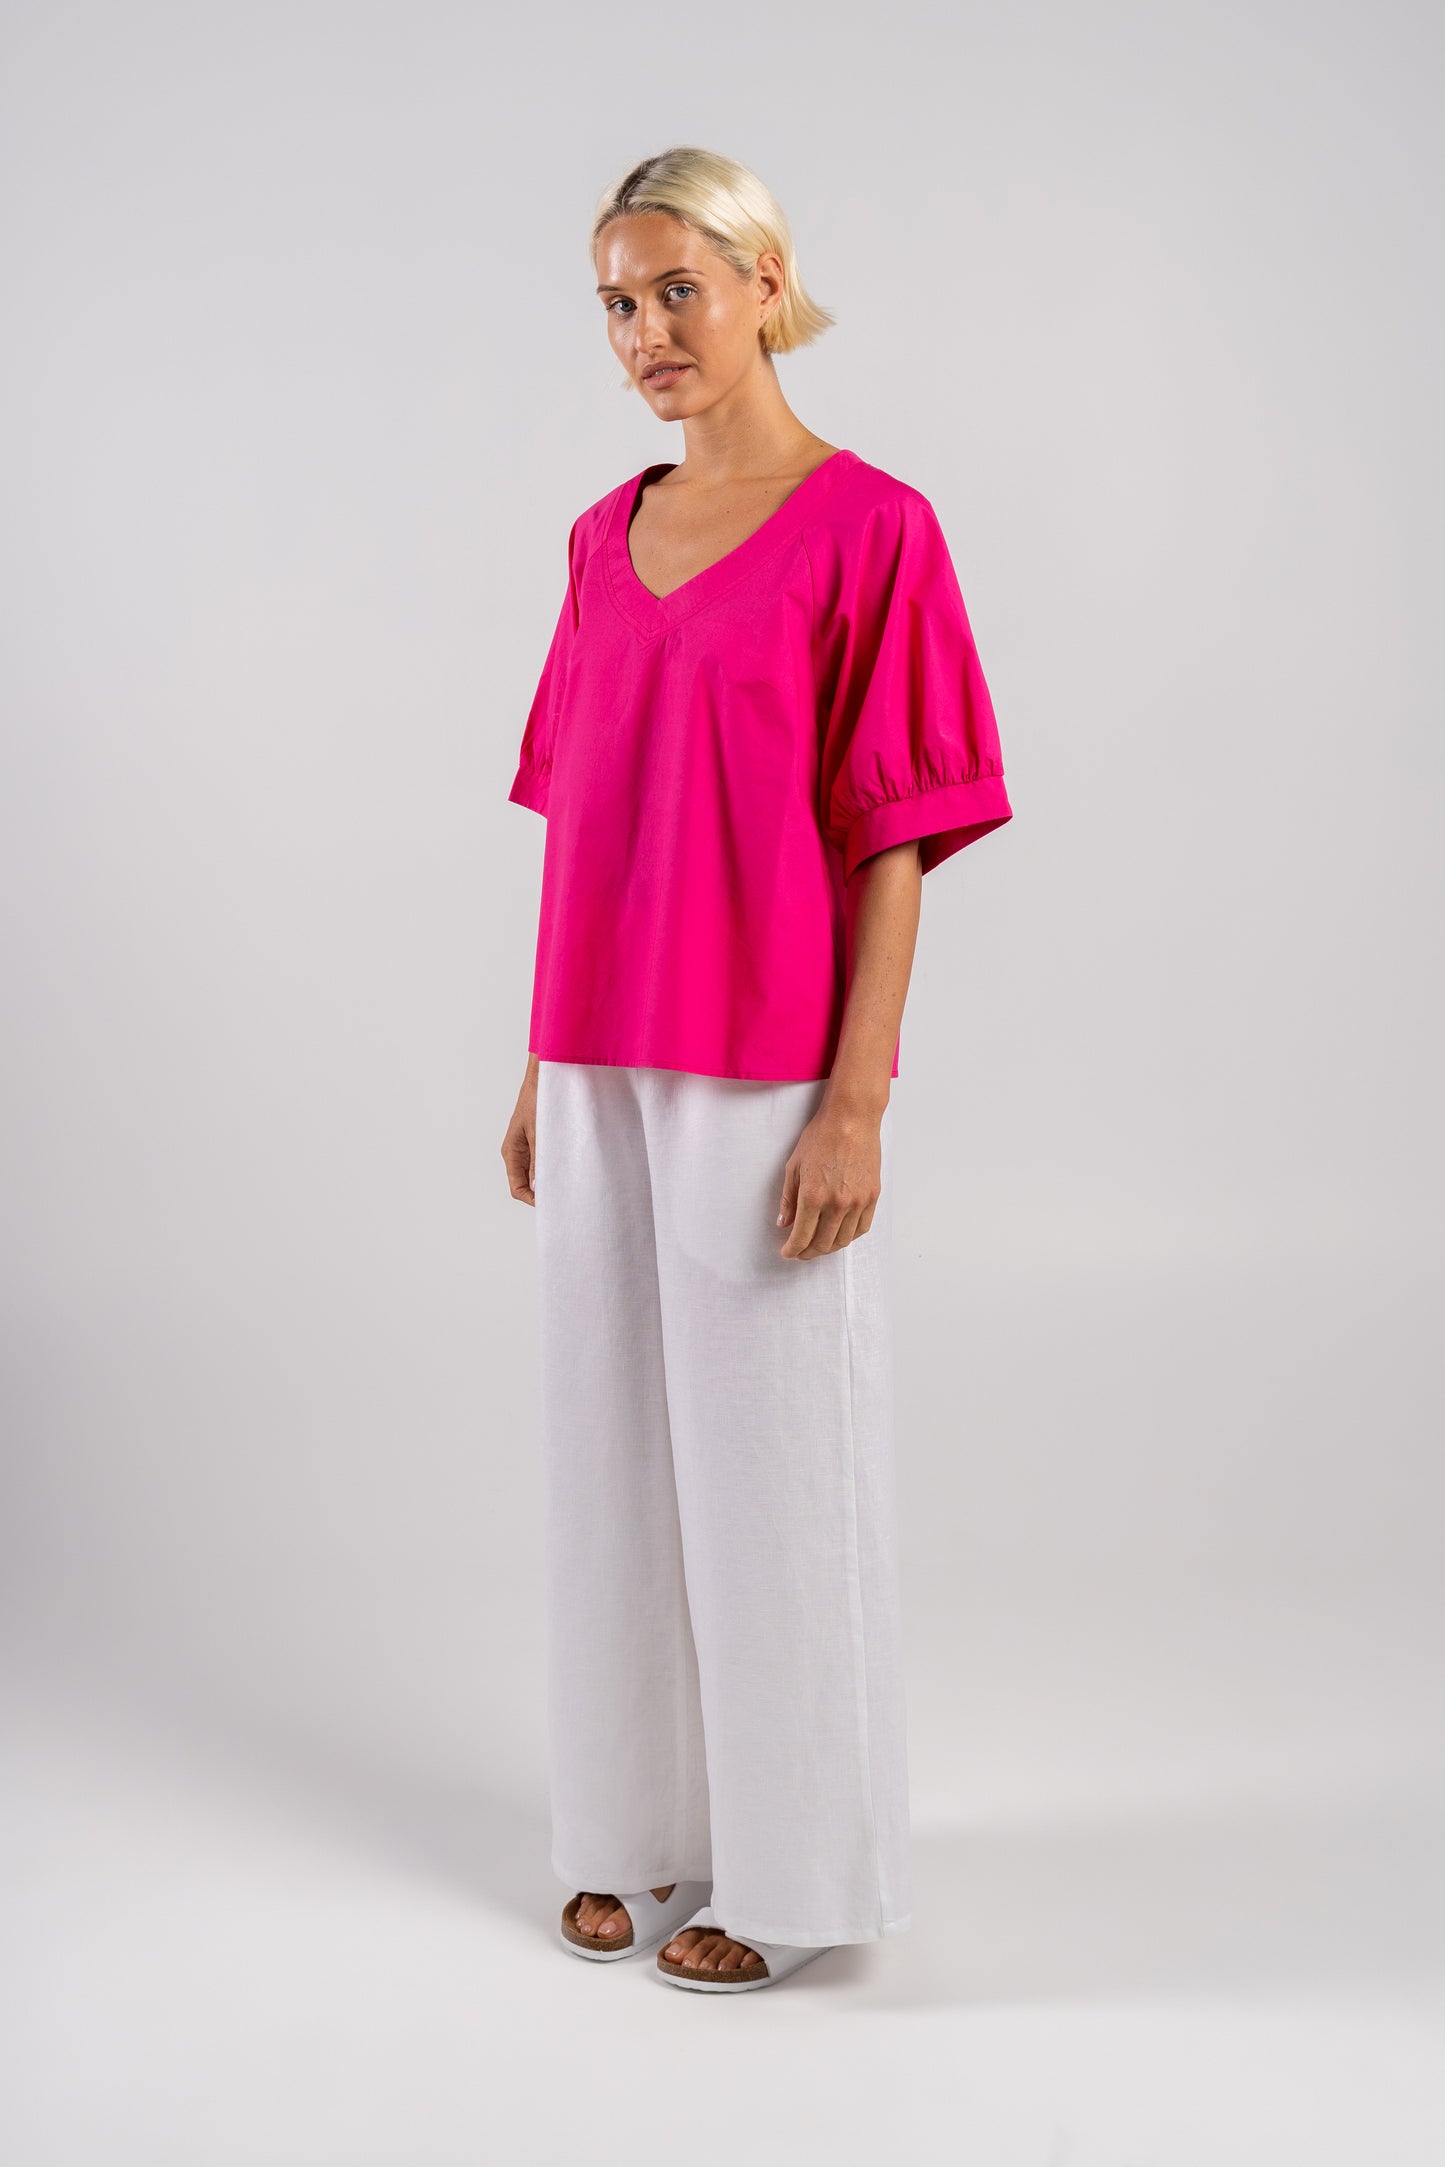 Wear Colour - 100% Cotton Half Sl Deep V Top in Pink | WC102P